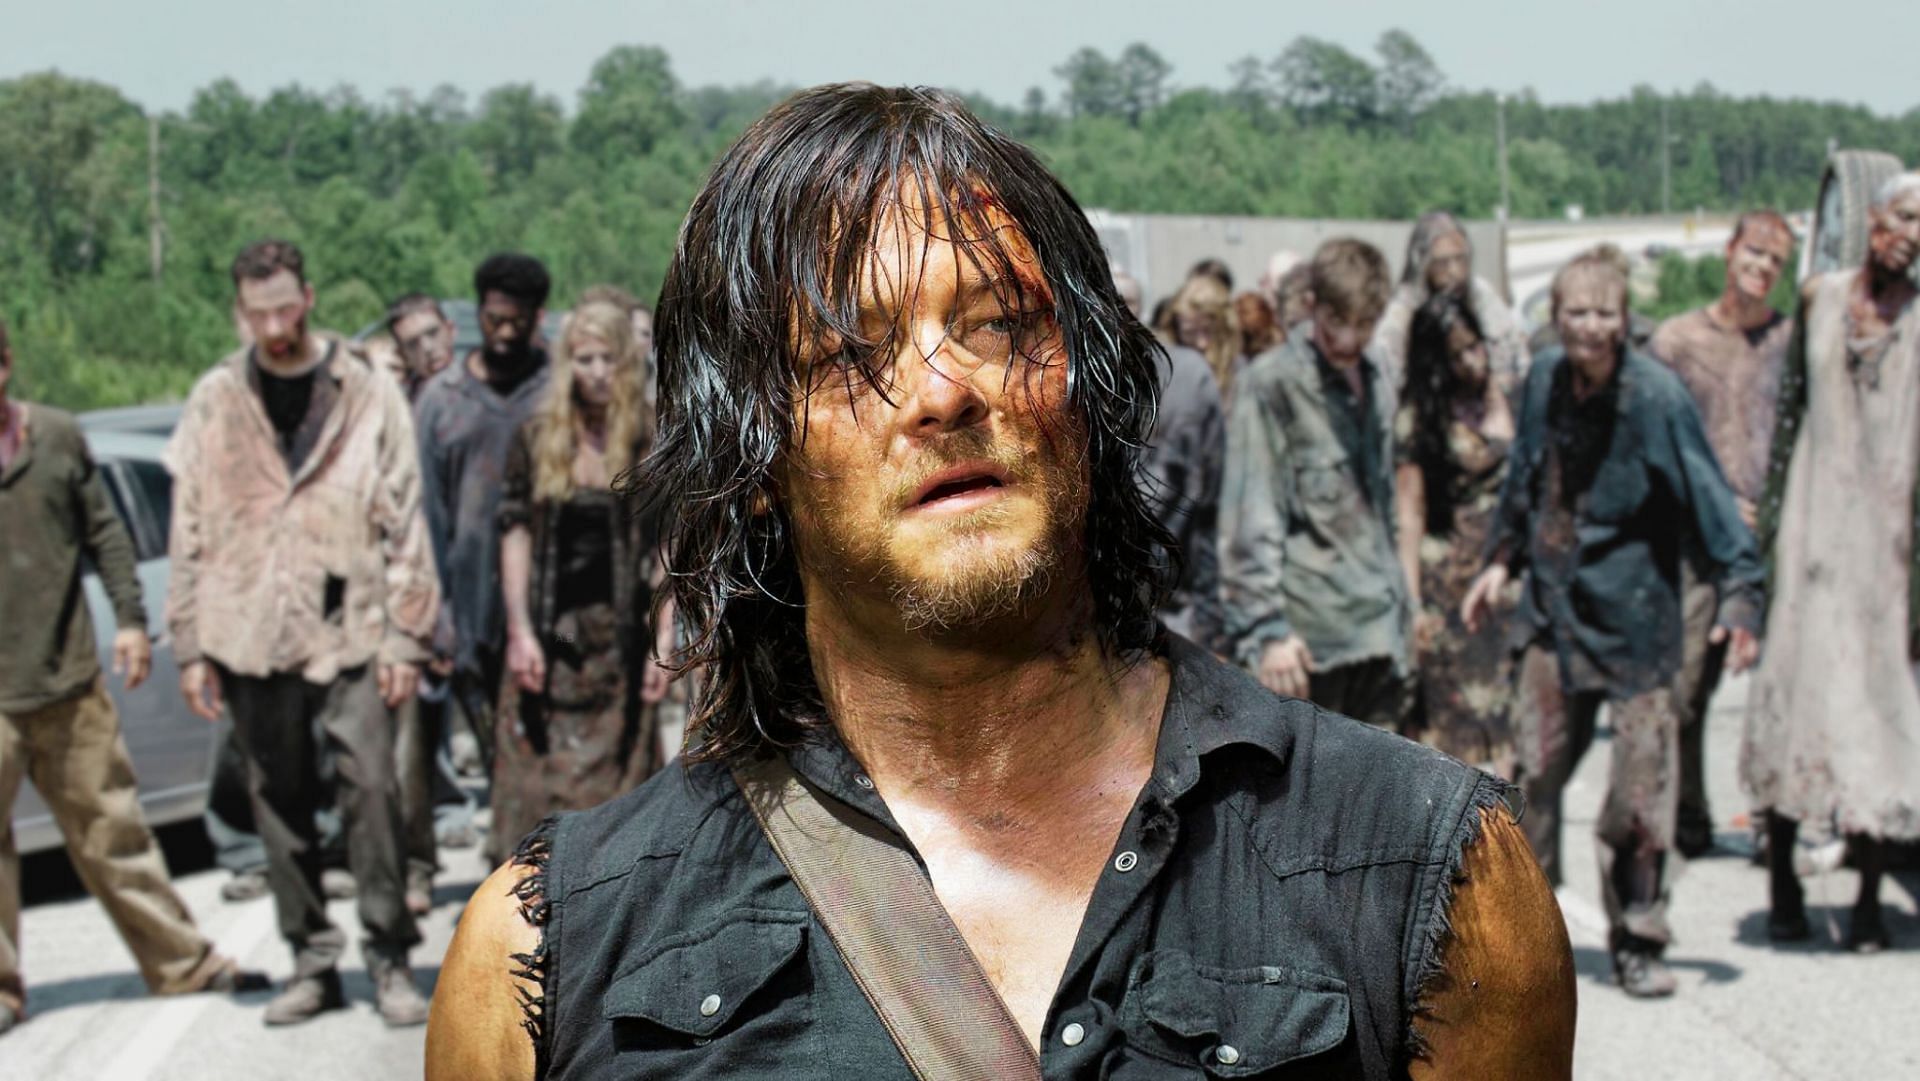 Robert Kirkman Reveals The Origin Of The Zombies On 'The Walking Dead